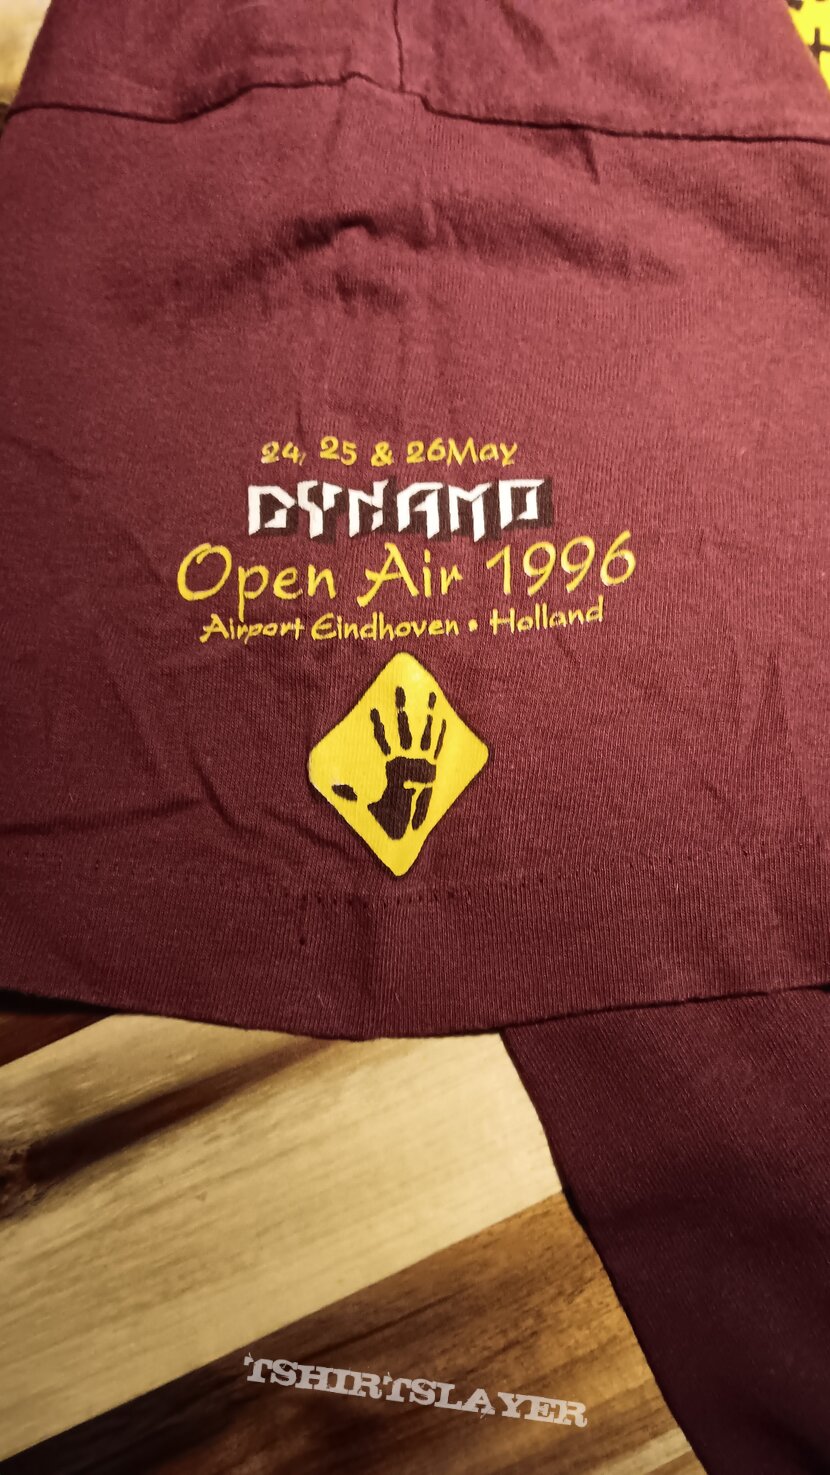 Dynamo Open Air 96